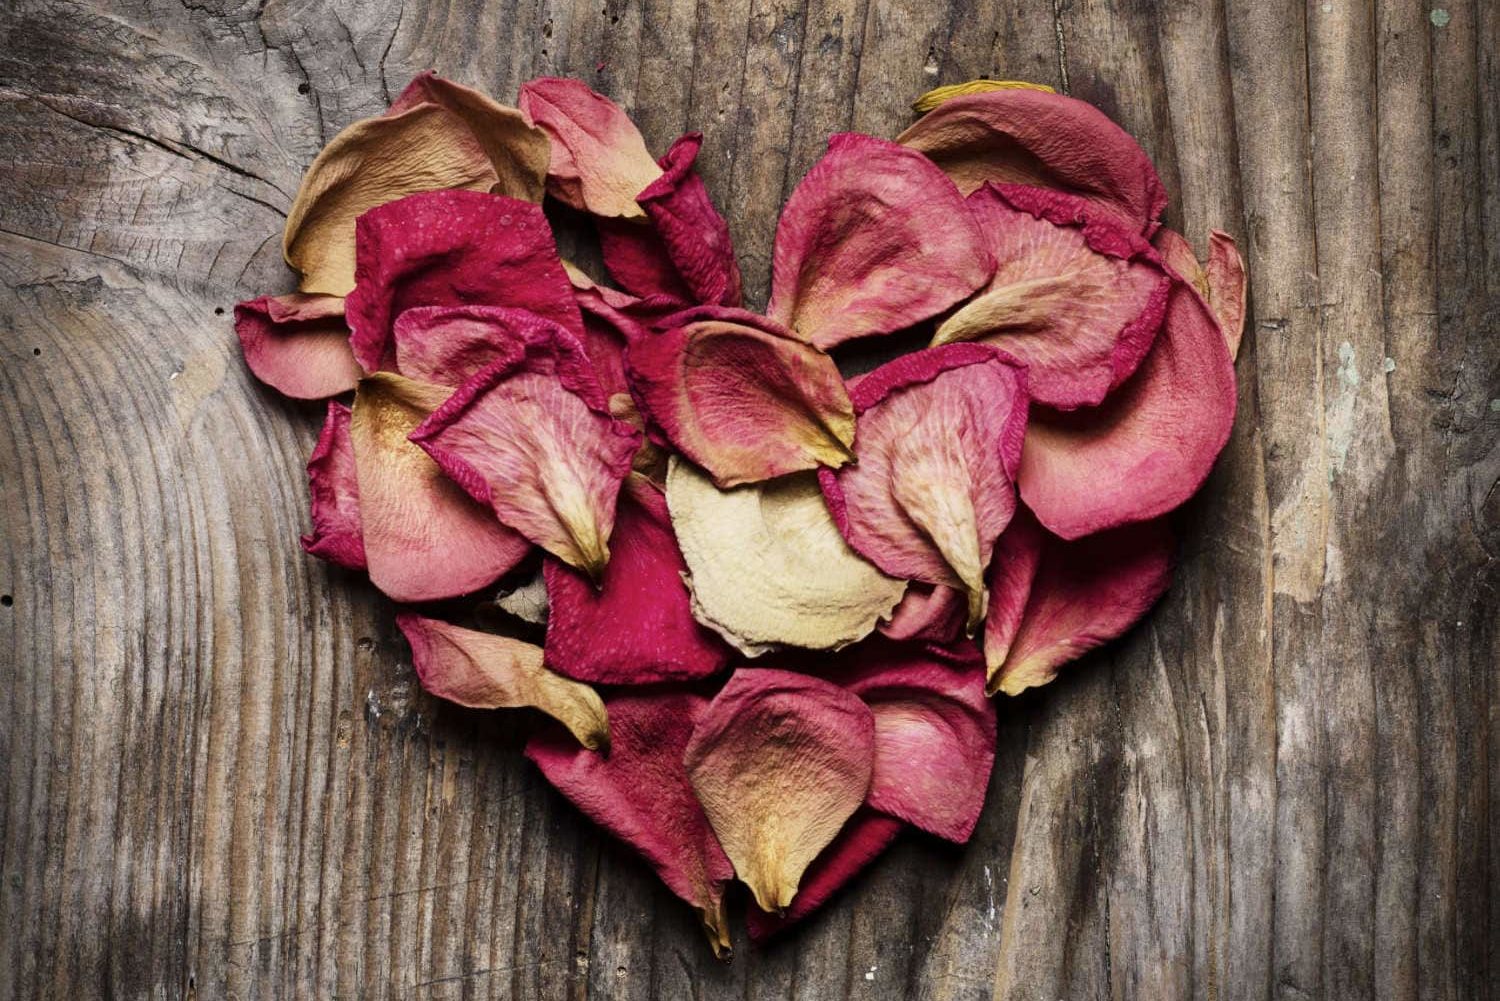 Rose petals in heart shape